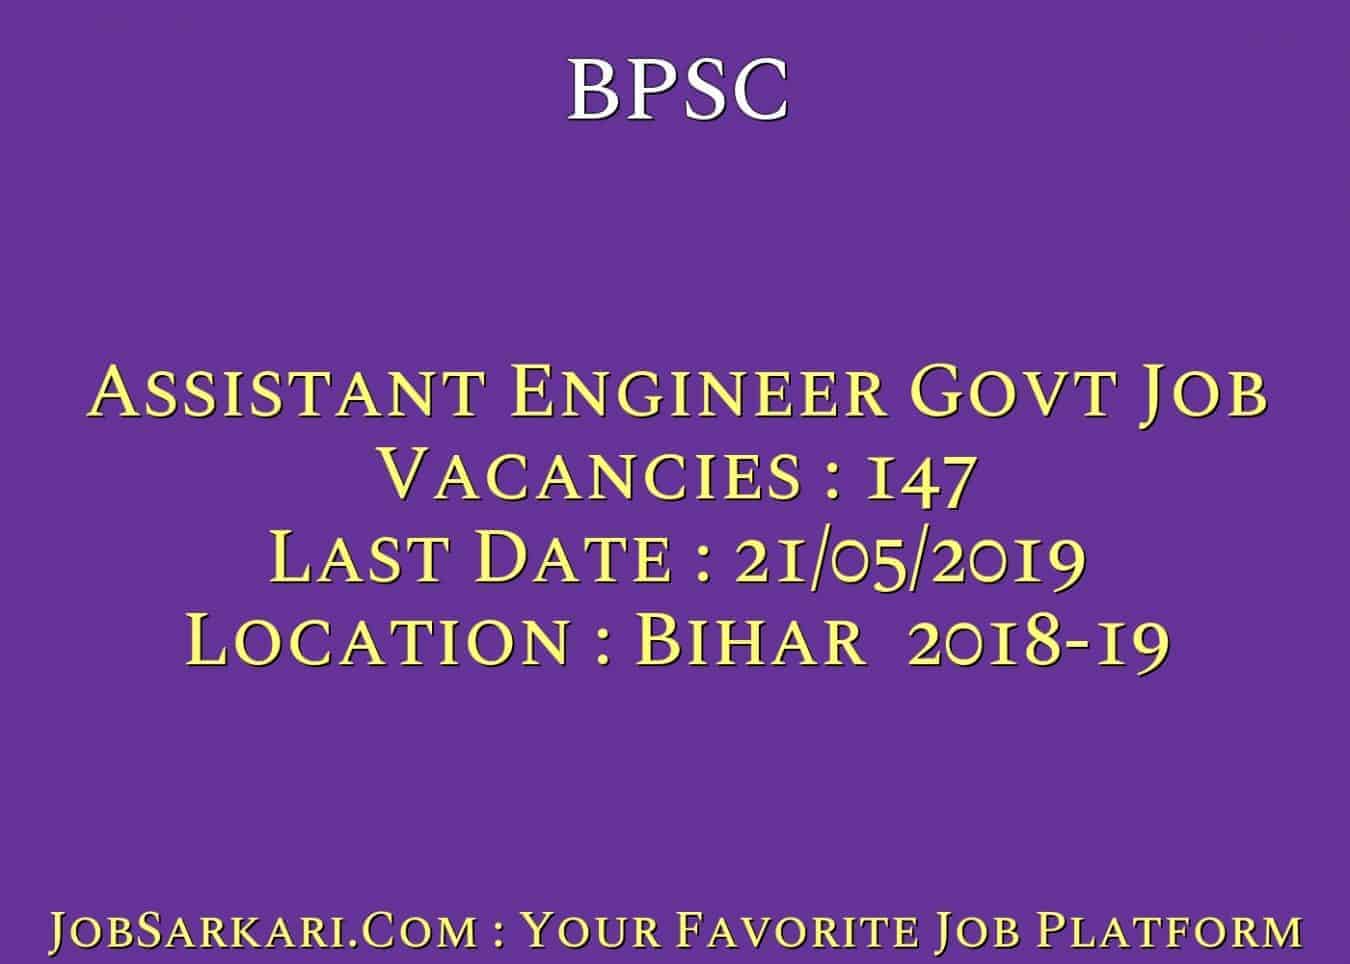 BPSC Recruitment 2019 For Assistant Engineer Govt Job